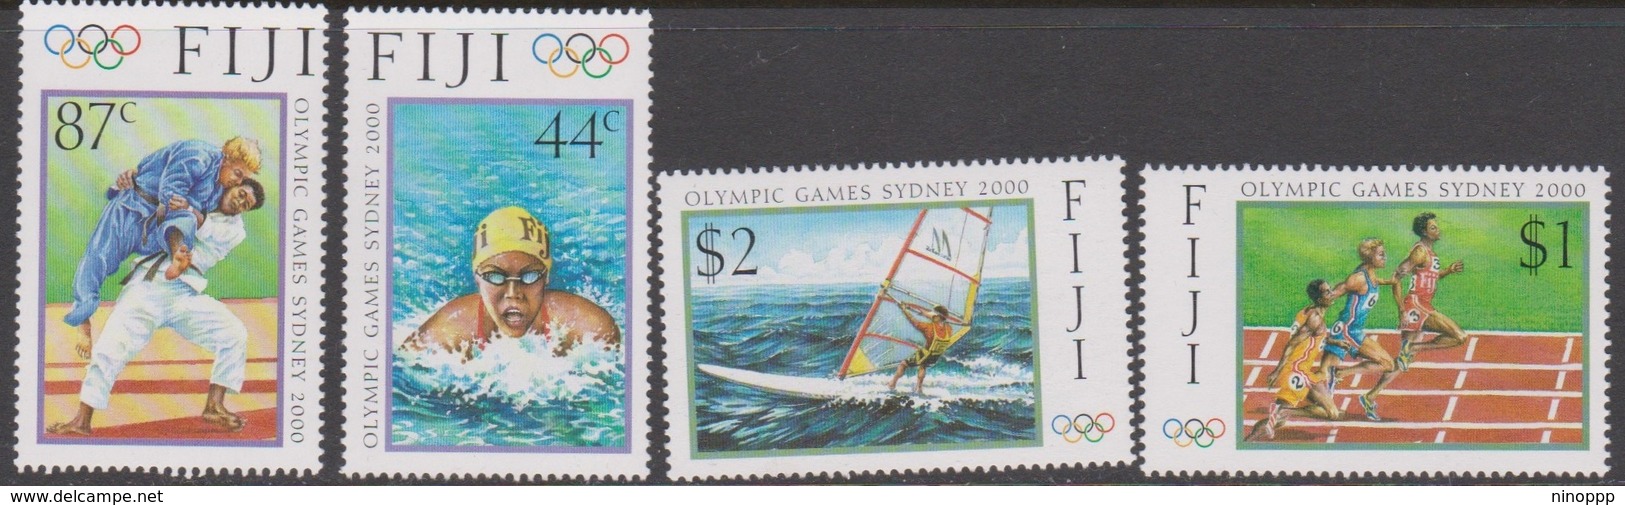 Fiji SG 1102-1105 2000 Olympic Games Sydney, Mint Never Hinged - Fiji (1970-...)